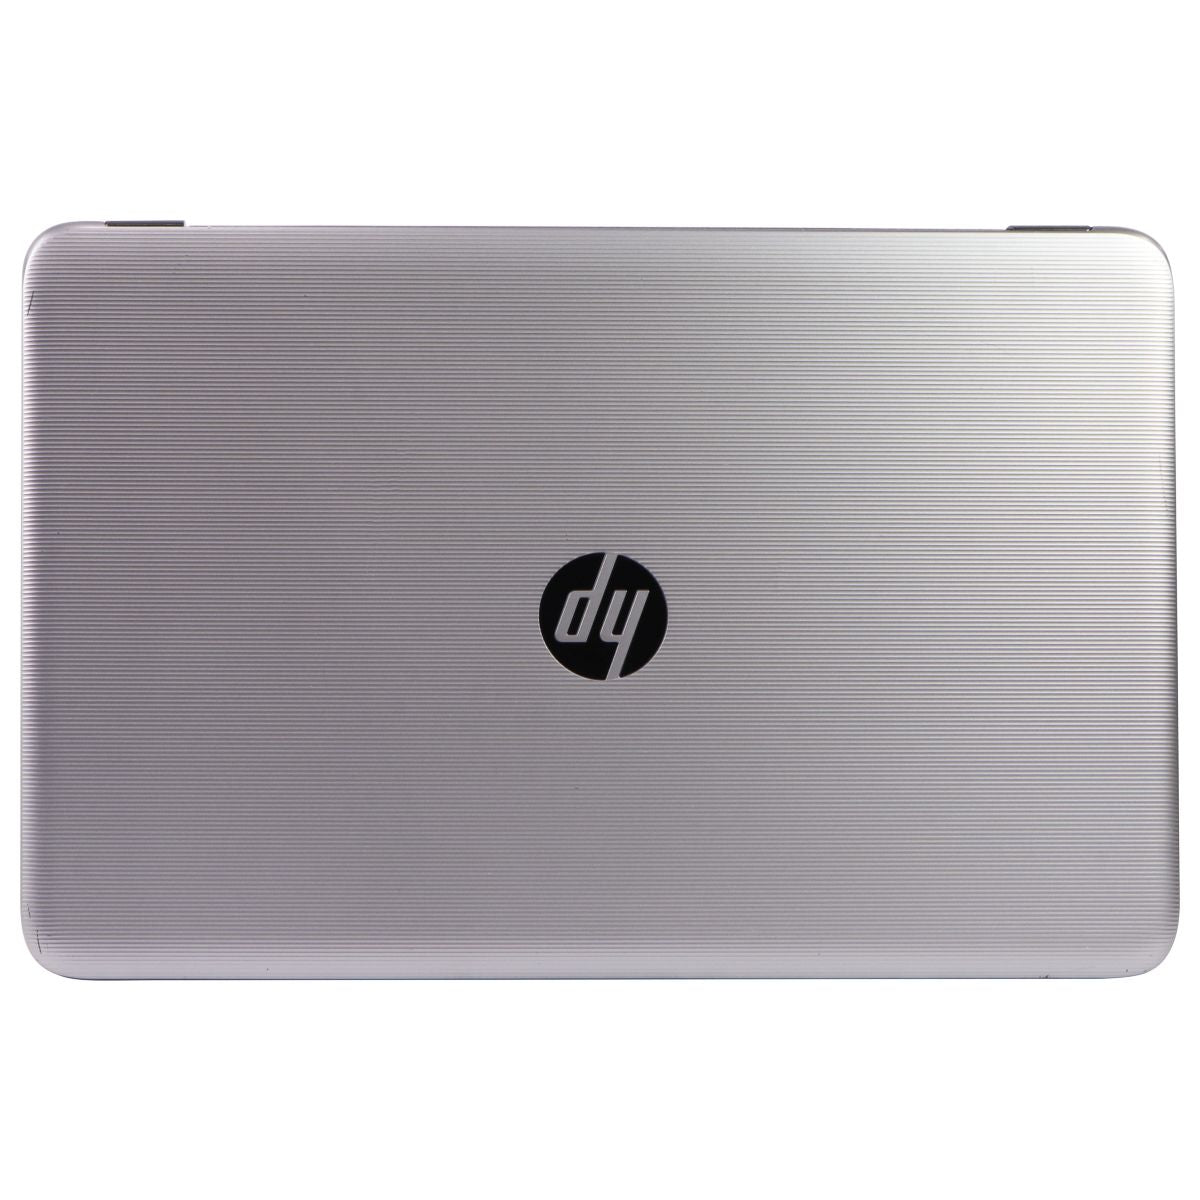 HP Notebook (15.6-in) Laptop (15-ay041wm) i3-6100U / 1TB HDD / 8GB / 10 Home